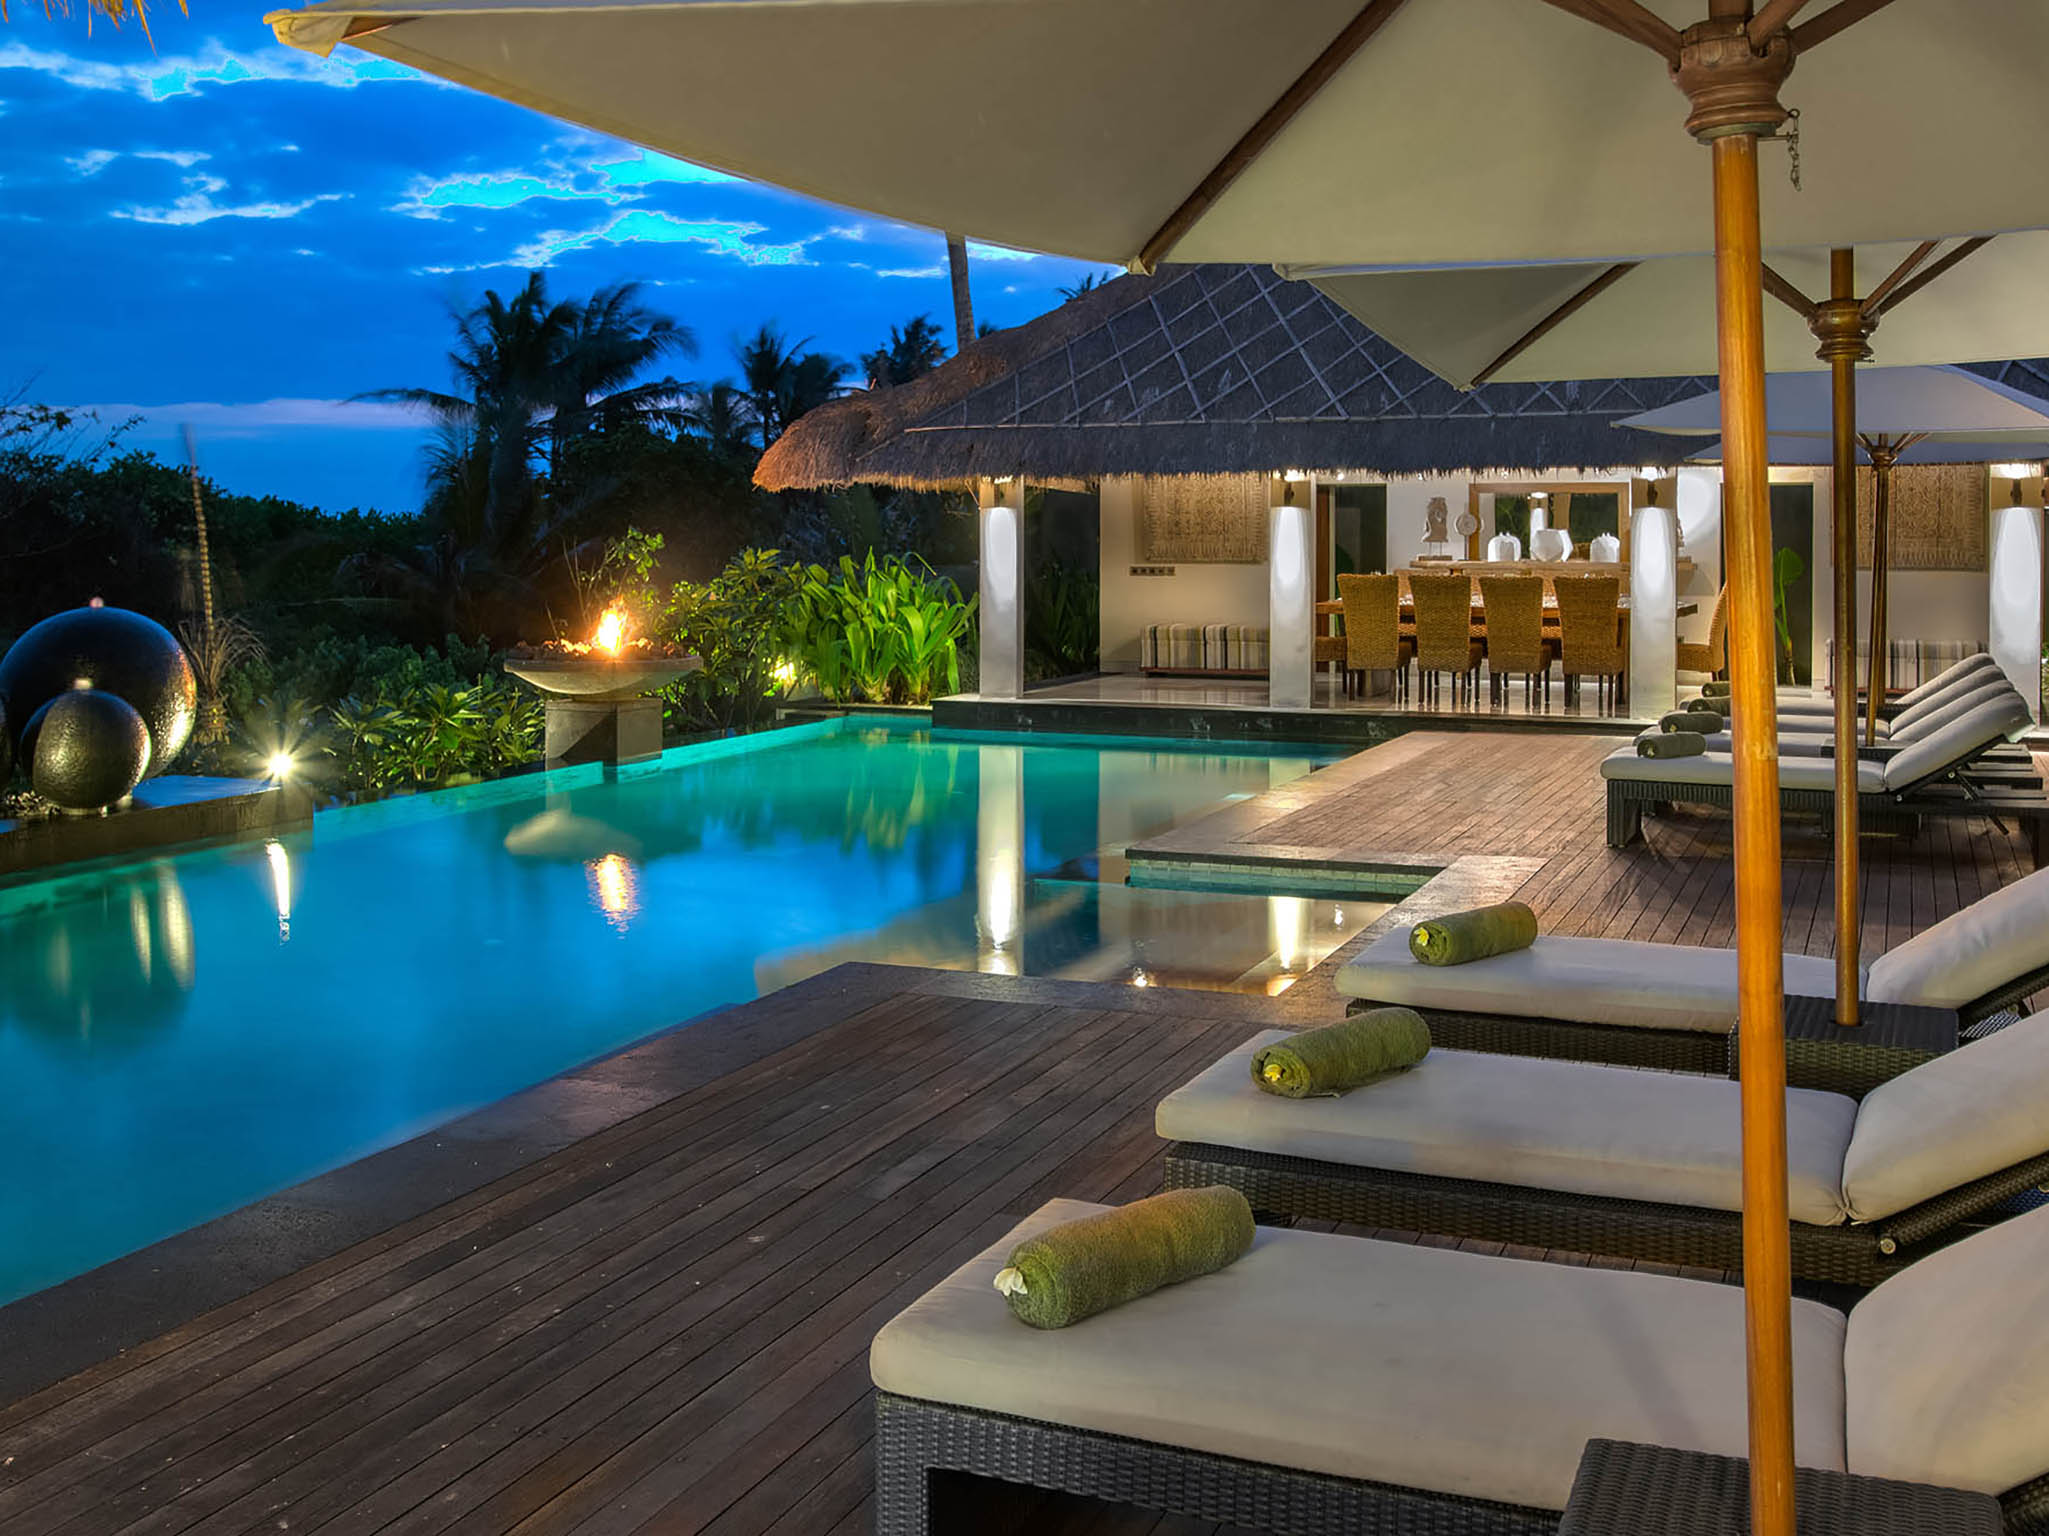 Seseh Beach Villa I - Poolside at twilight - Seseh Beach Villa I, Seseh-Tanah Lot, Bali